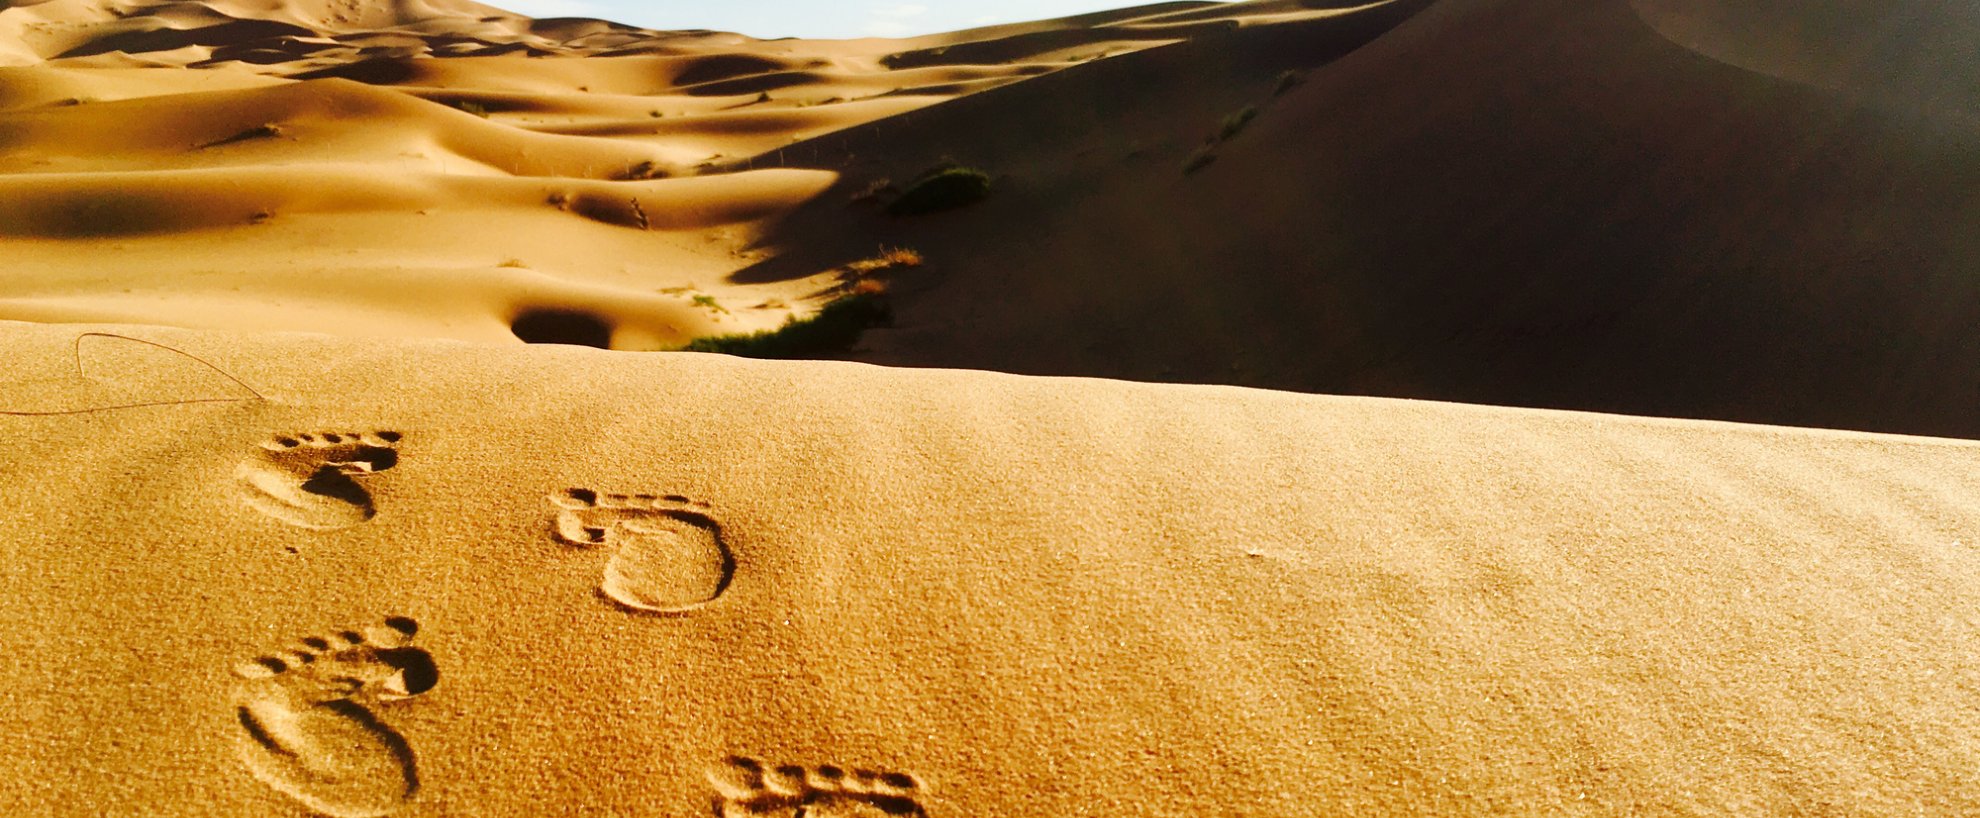 Sahara Wüste Marokko